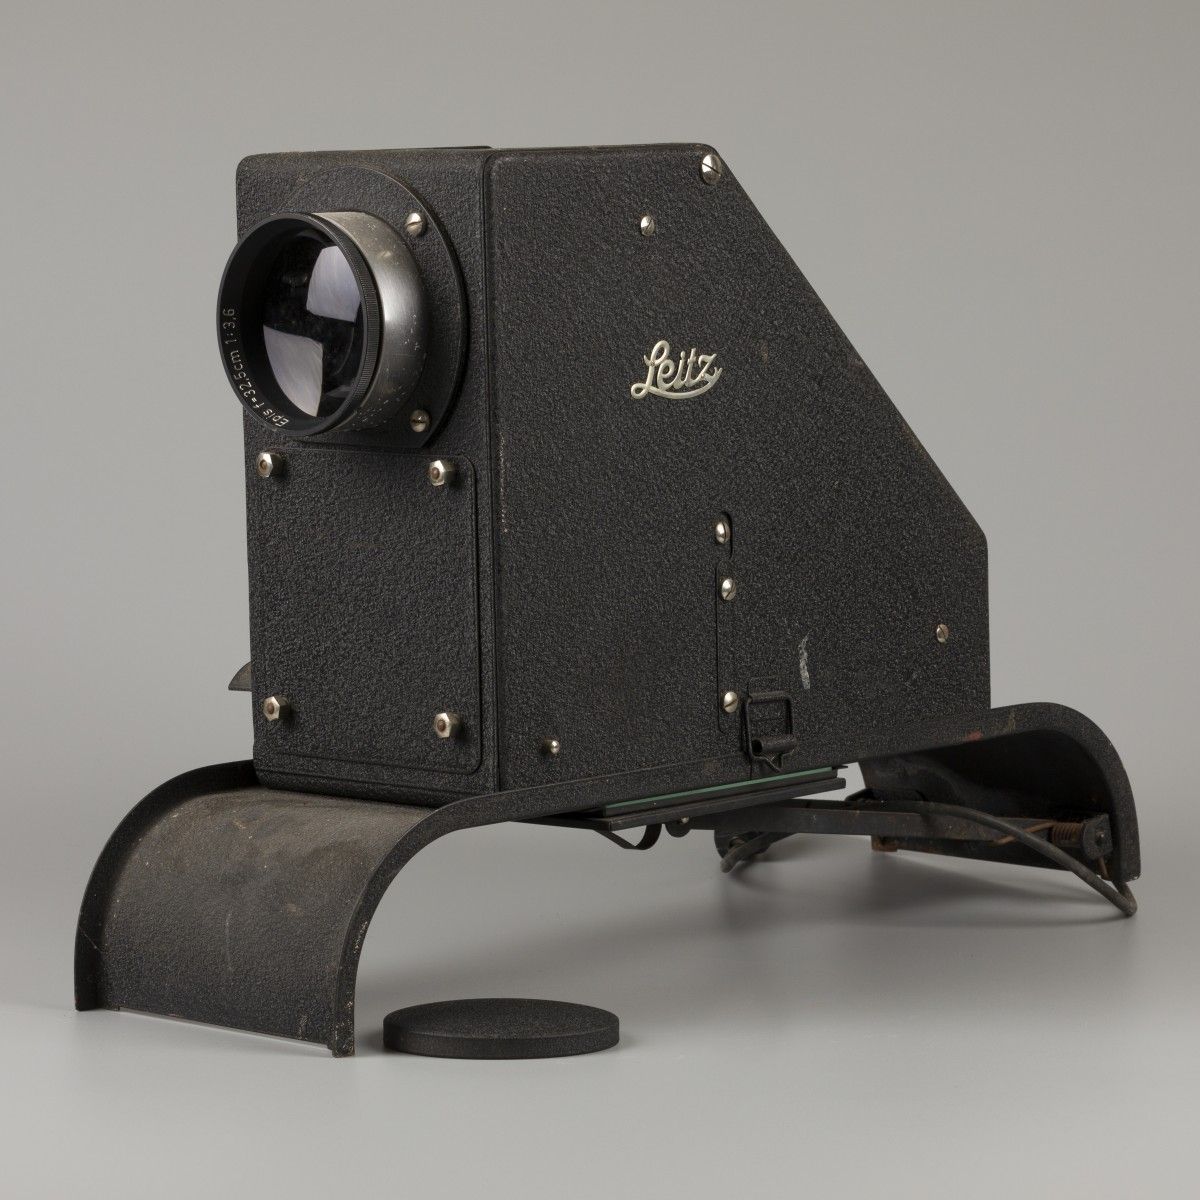 A Leitz Wetzlar epidiascope. Seriennummer: A79294